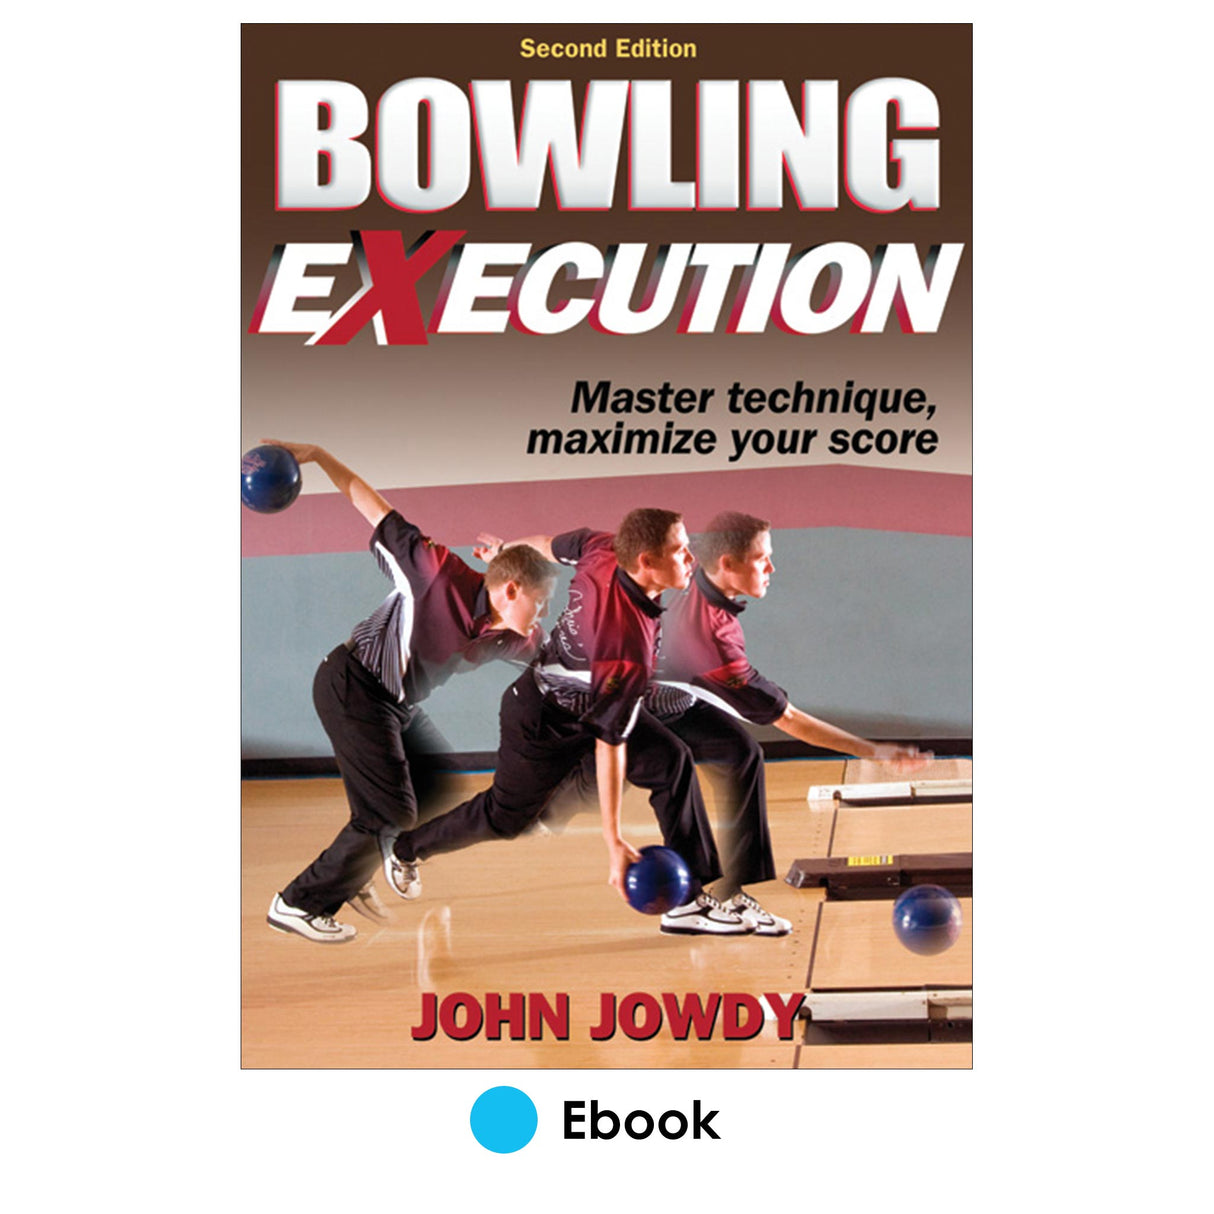 Bowling eXecution 2nd Edition PDF